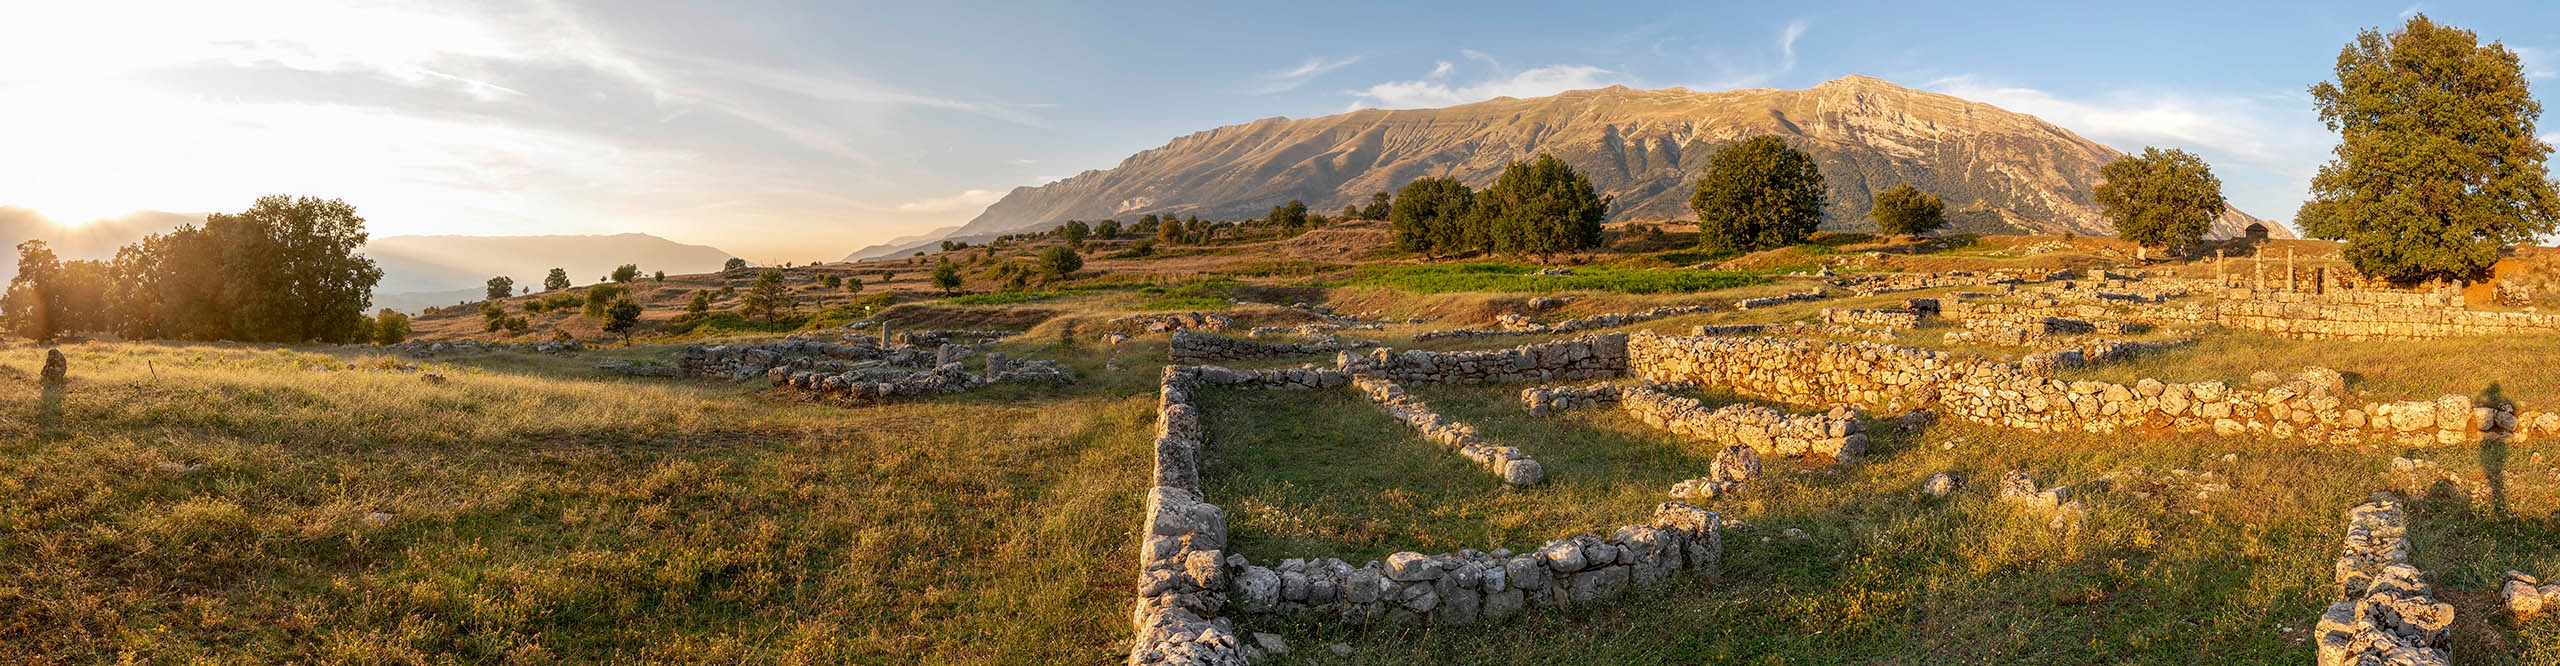 Albania, Gjirokaster County, Ruins of ancient Greek city of Antigonia at sunset